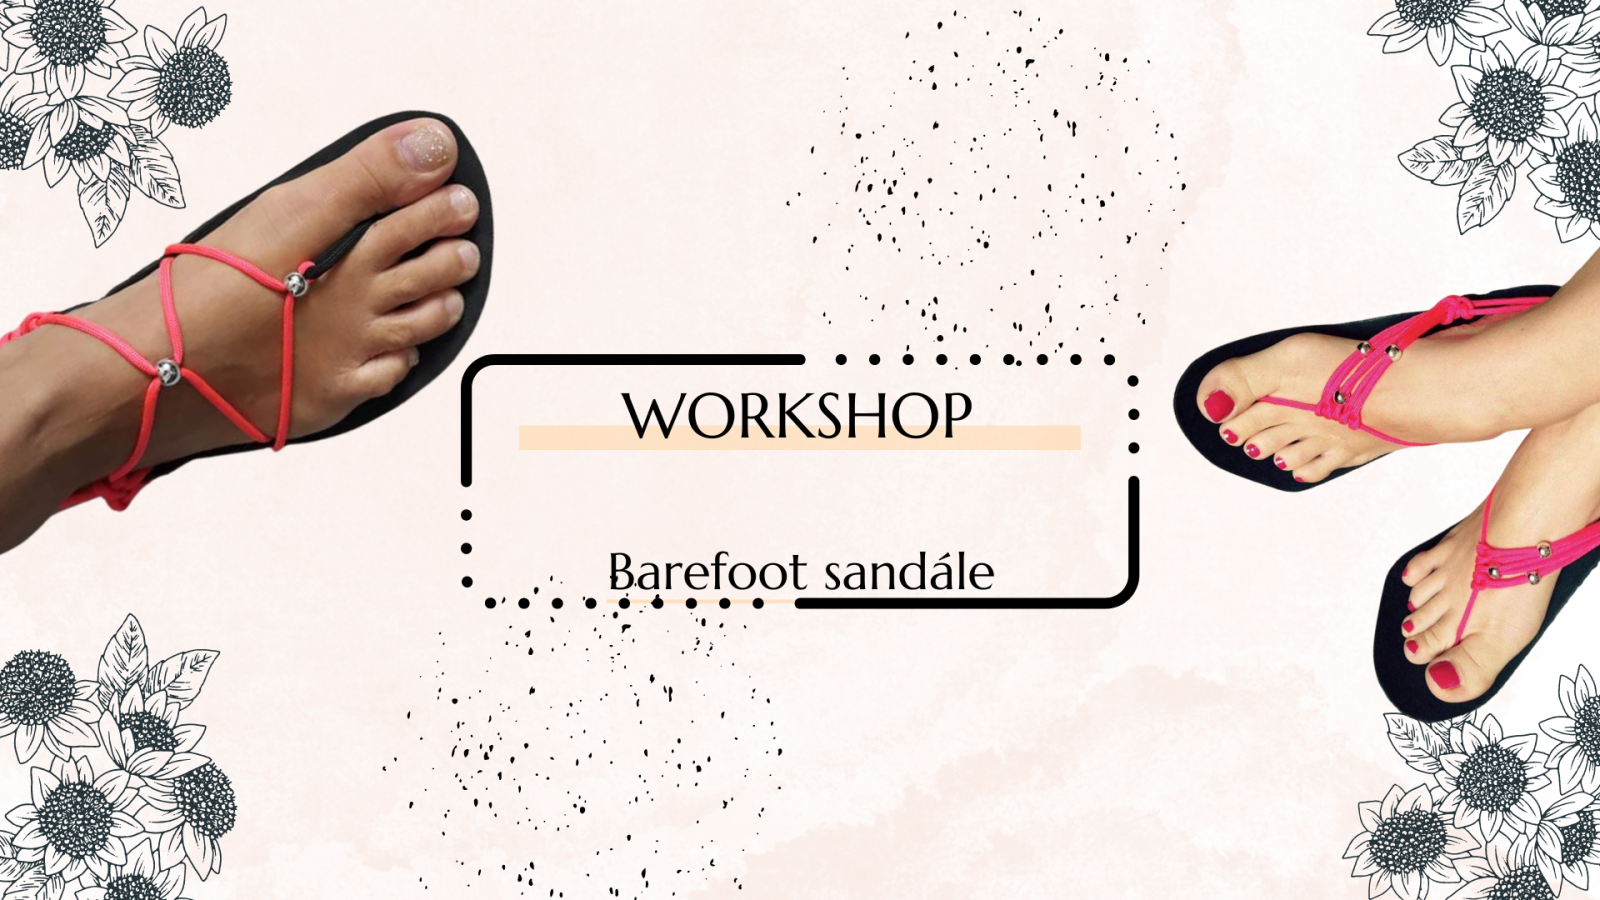 WORKSHOP "Barefoot sandále"